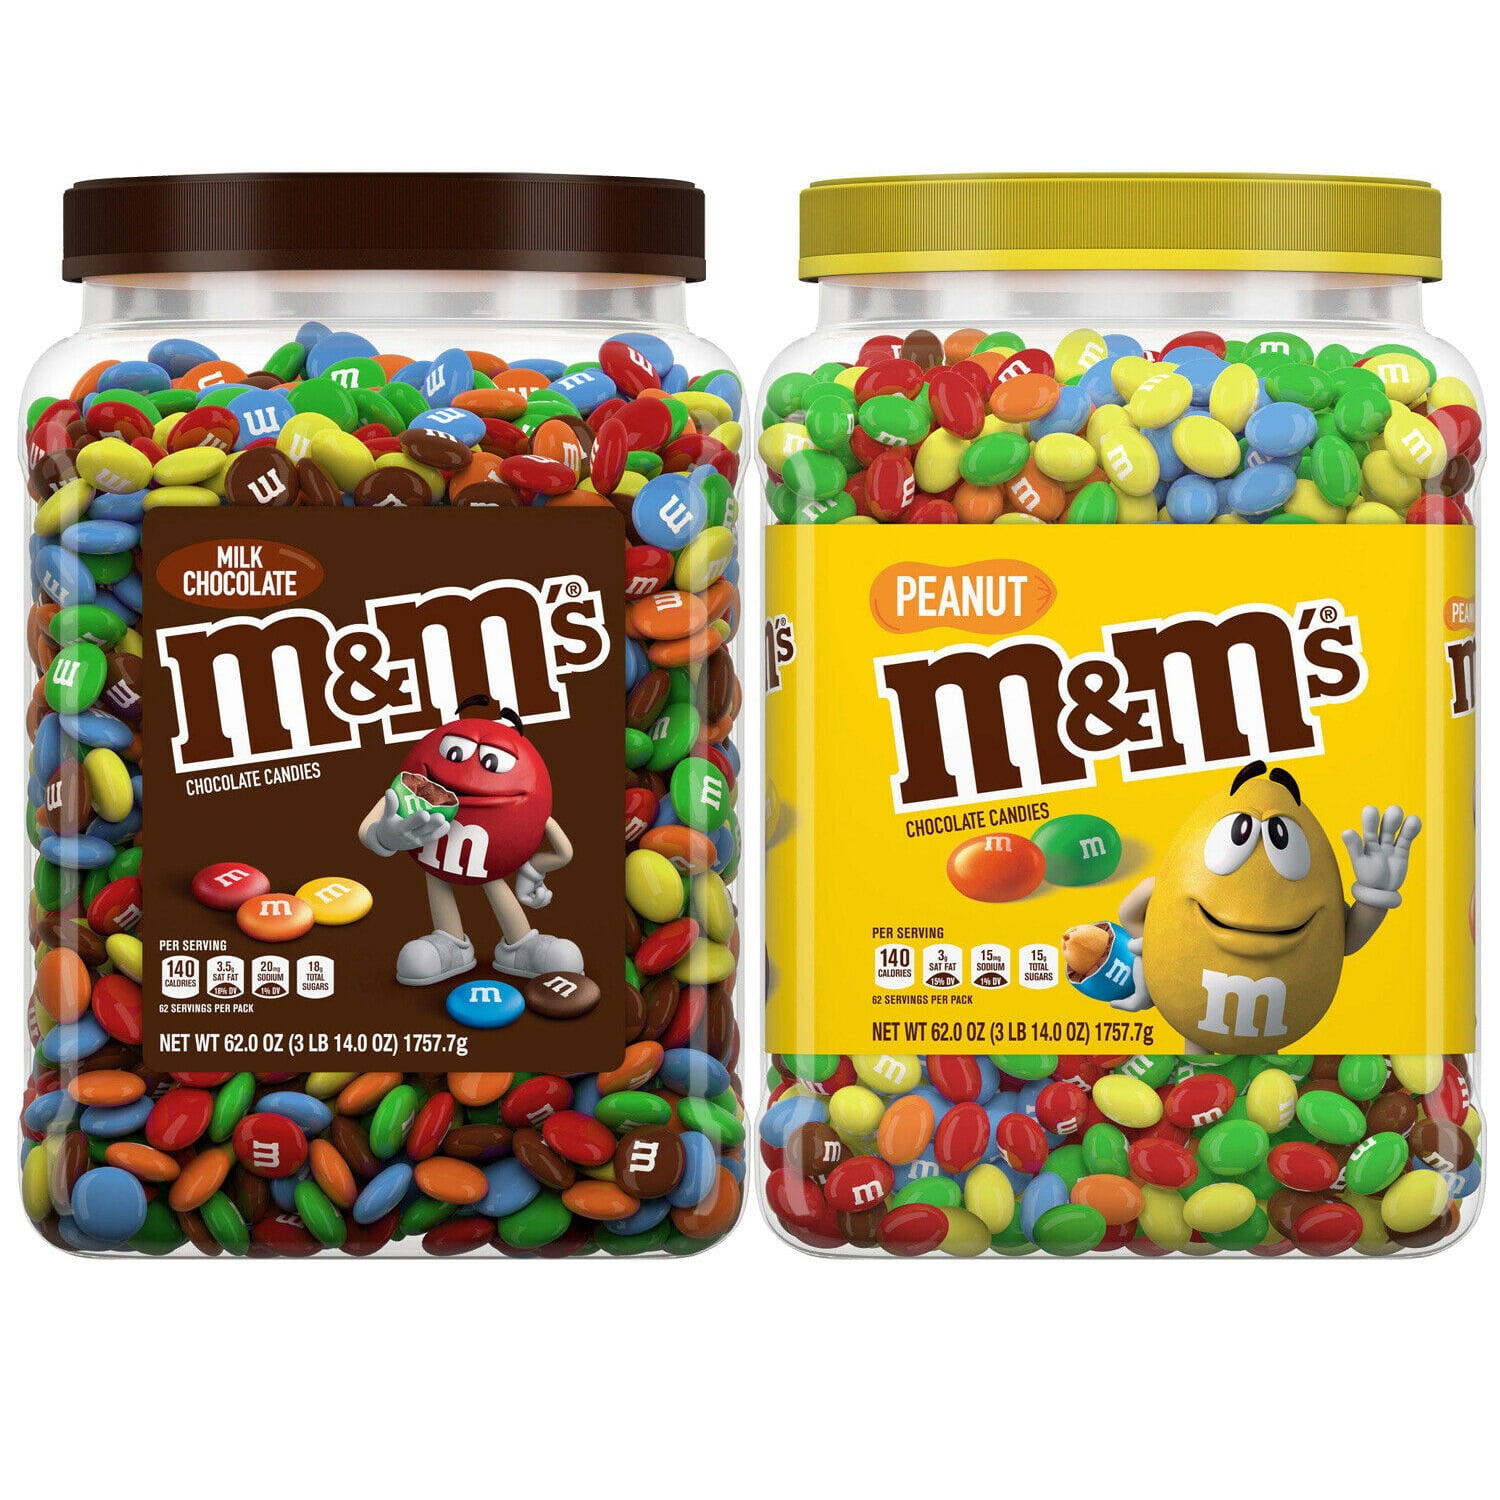 M&M's Ghoul's Mix Peanut Chocolate Candy Jar - 62 Oz